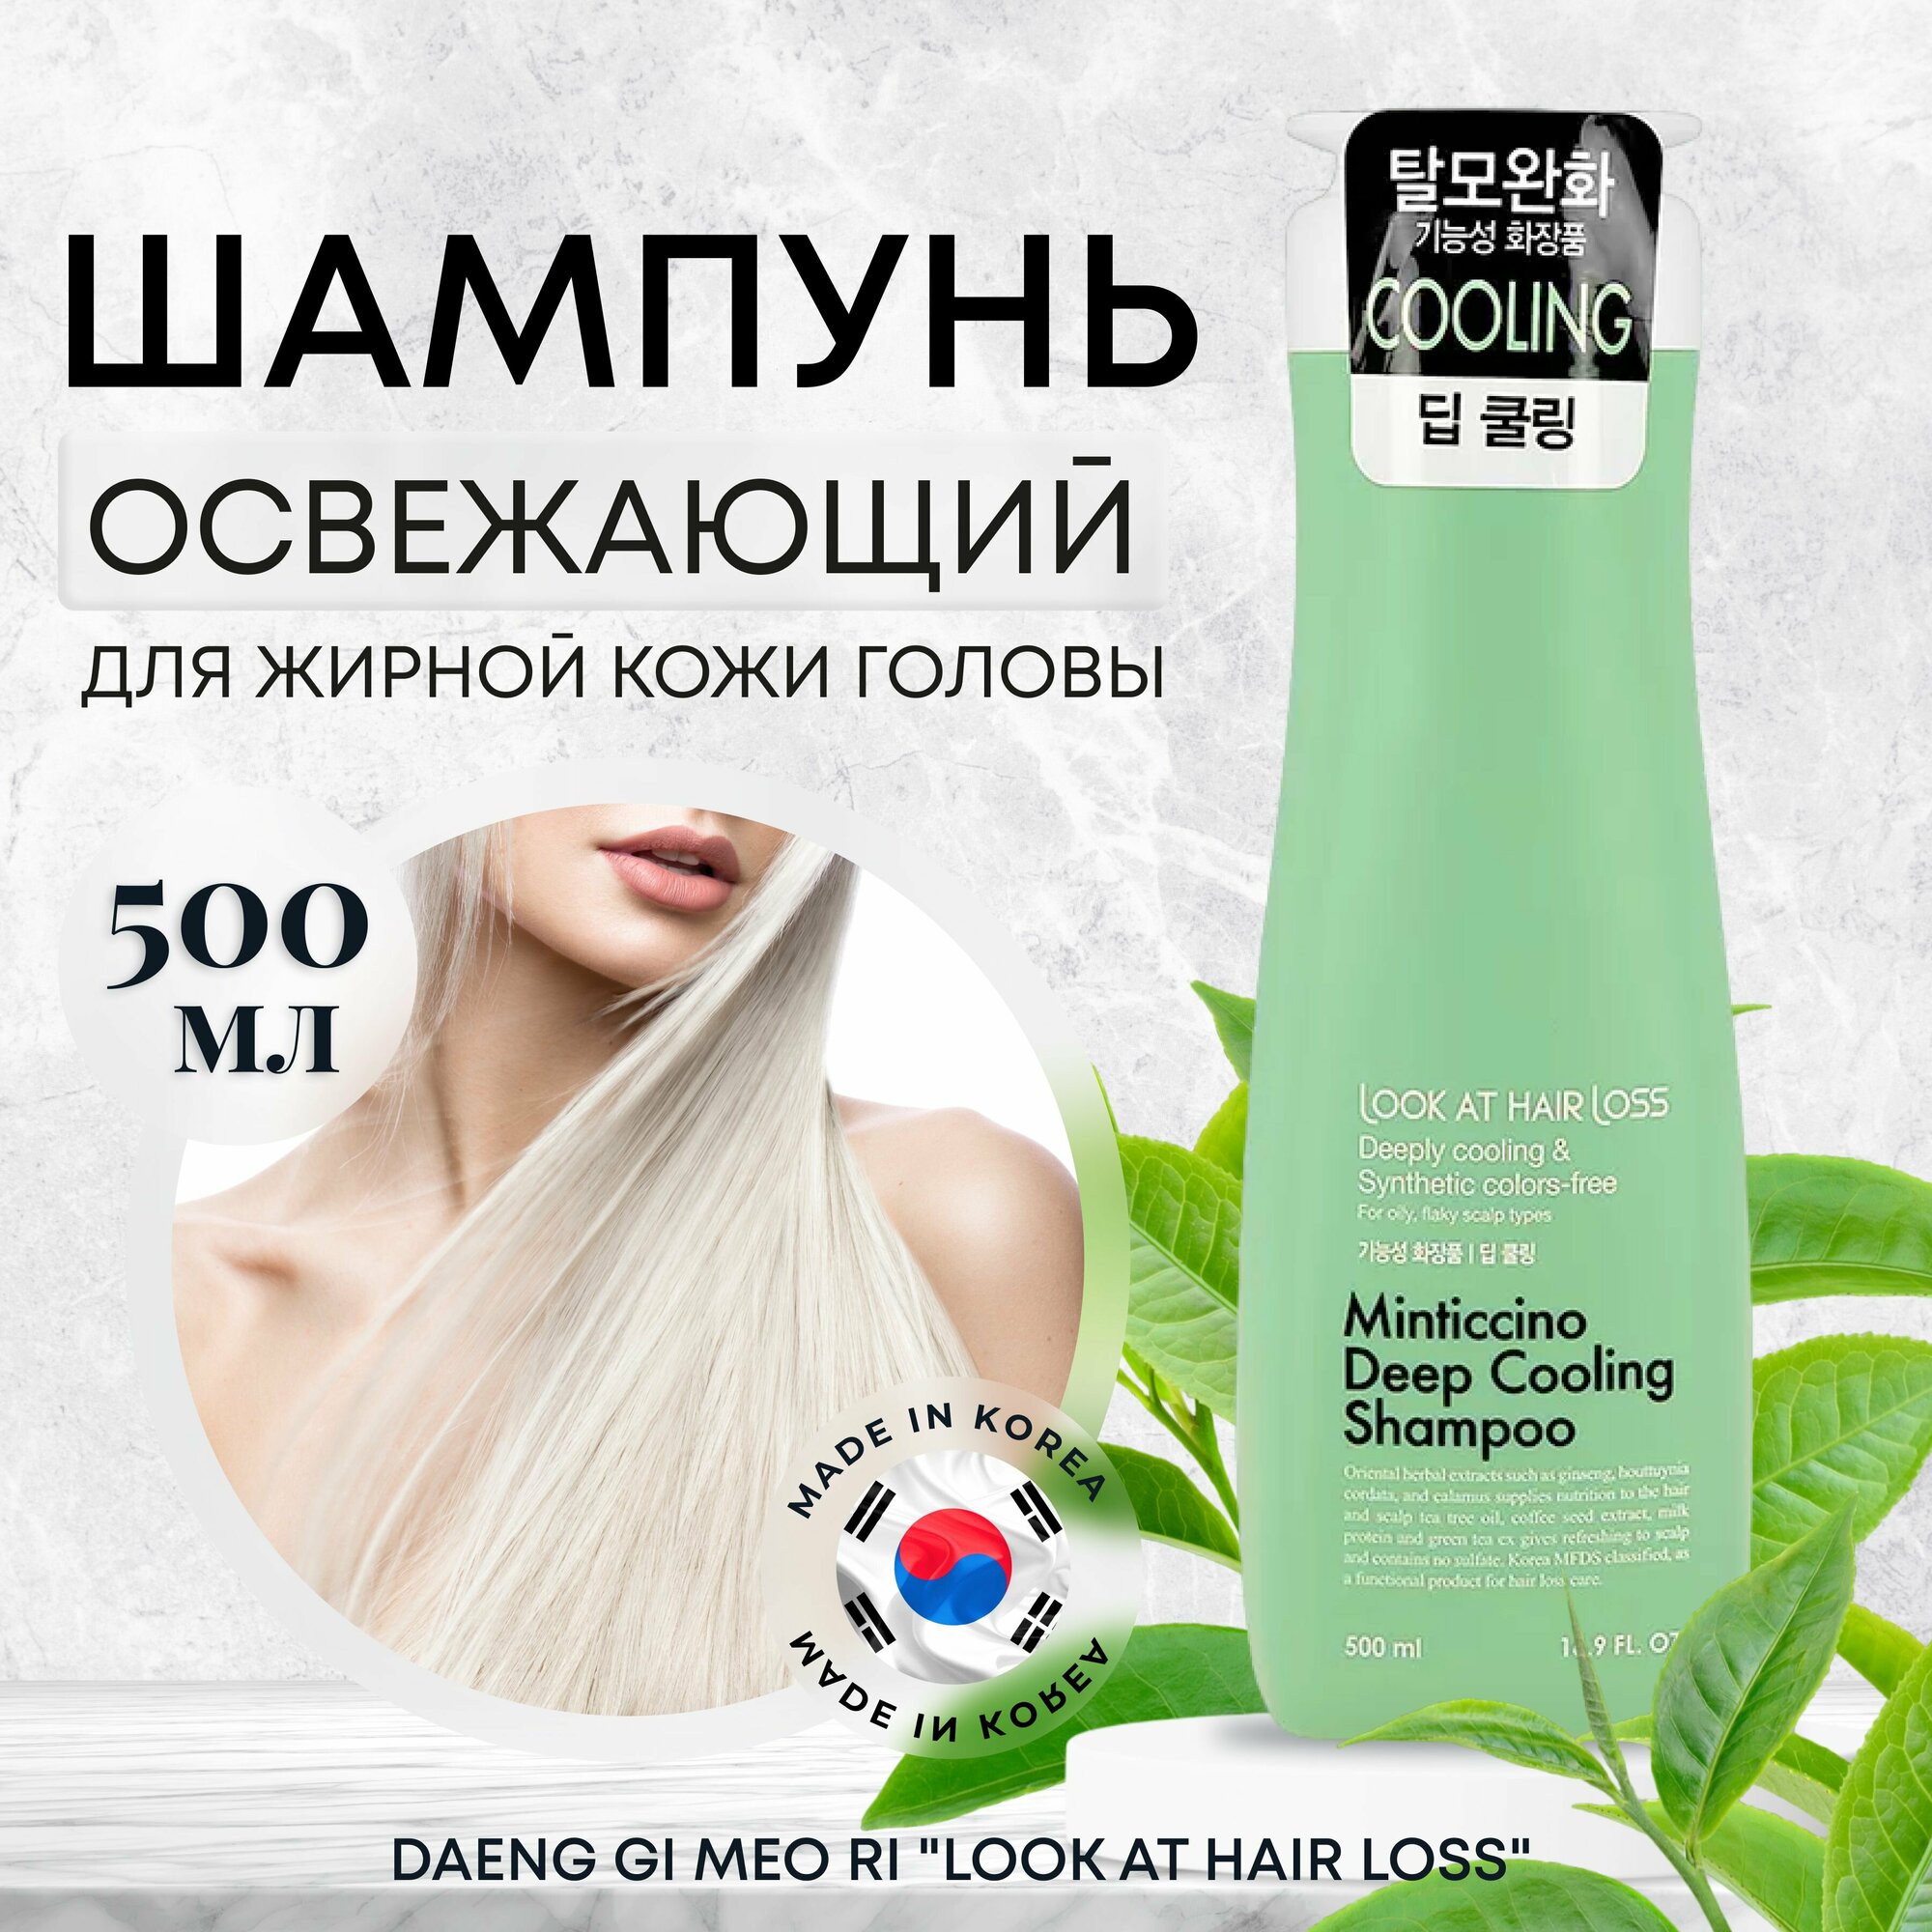 Шампунь для волос женский Корея, DAENG GI MEO RI, 500 мл охлаждающий для жирной кожи головы